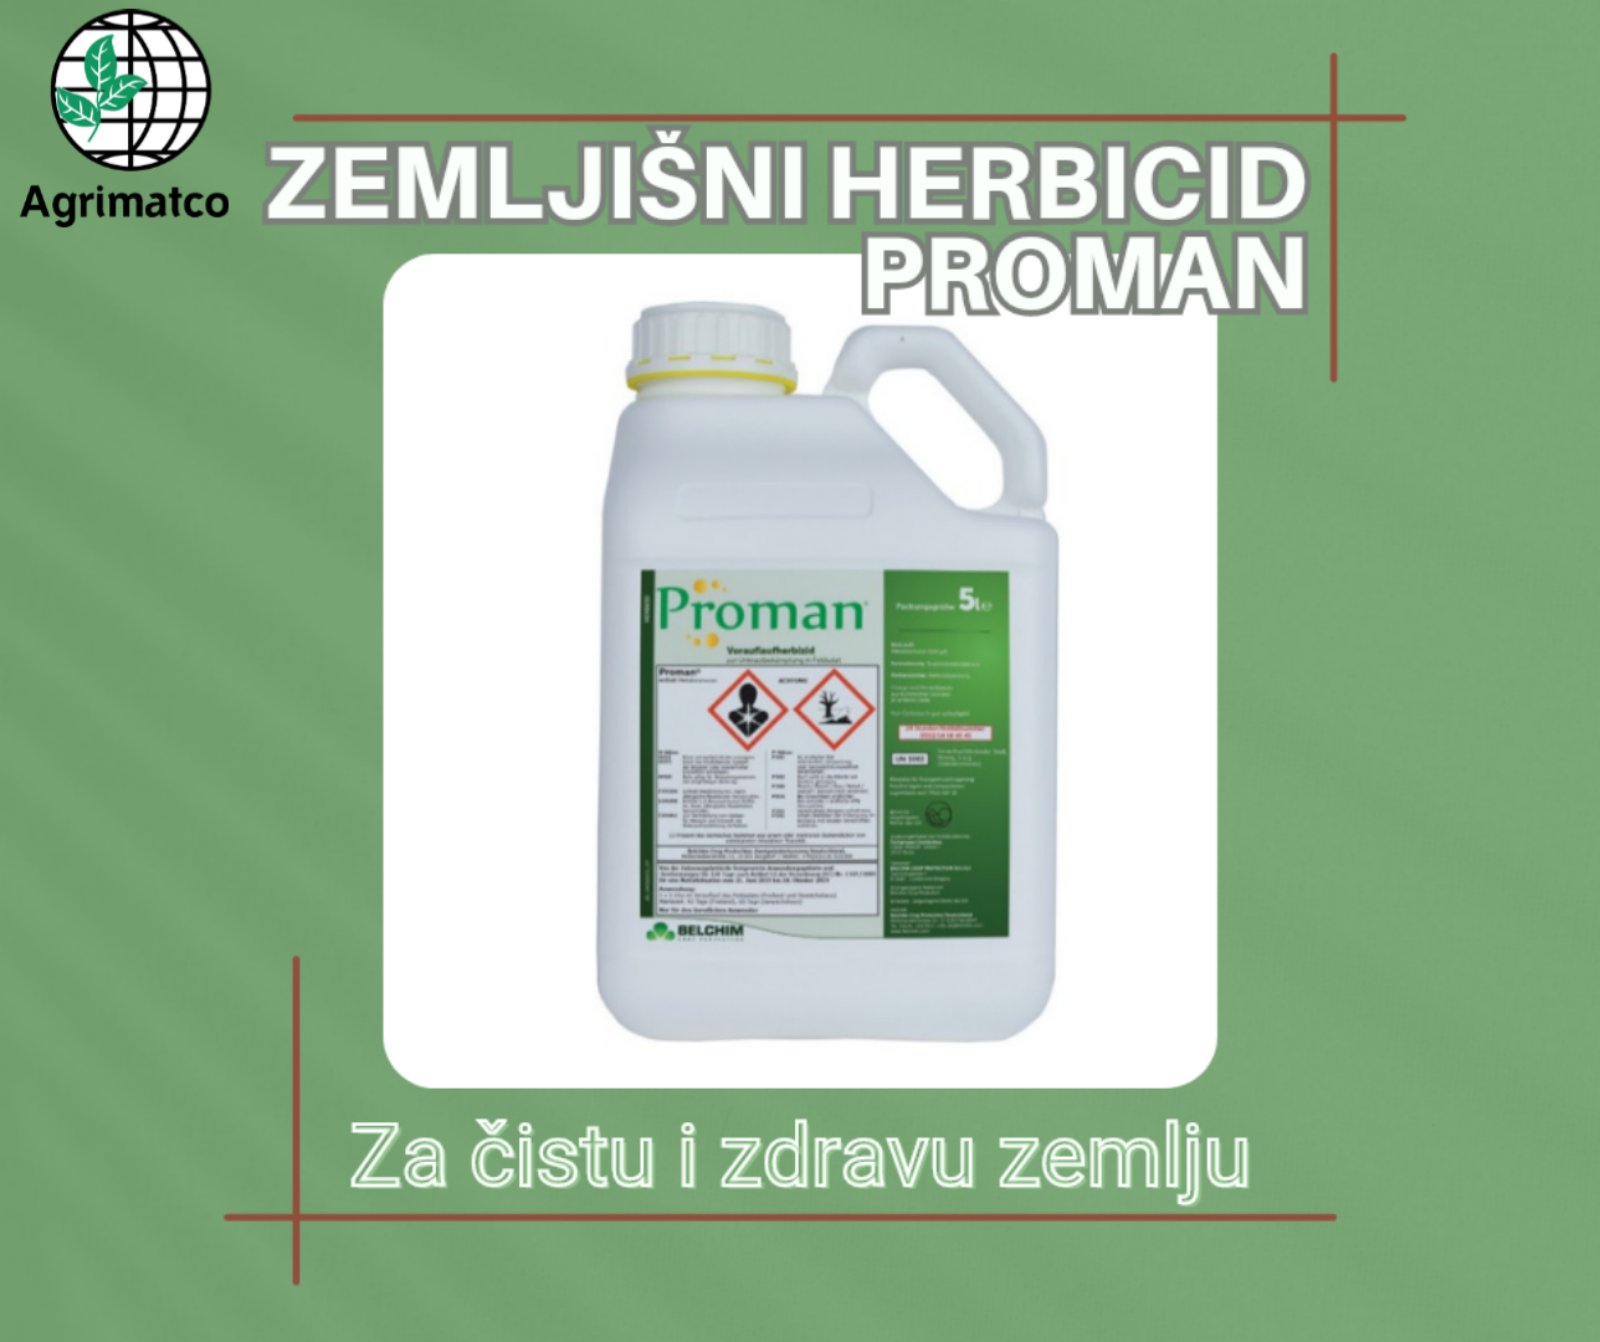 Zemljišni herbicid Proman